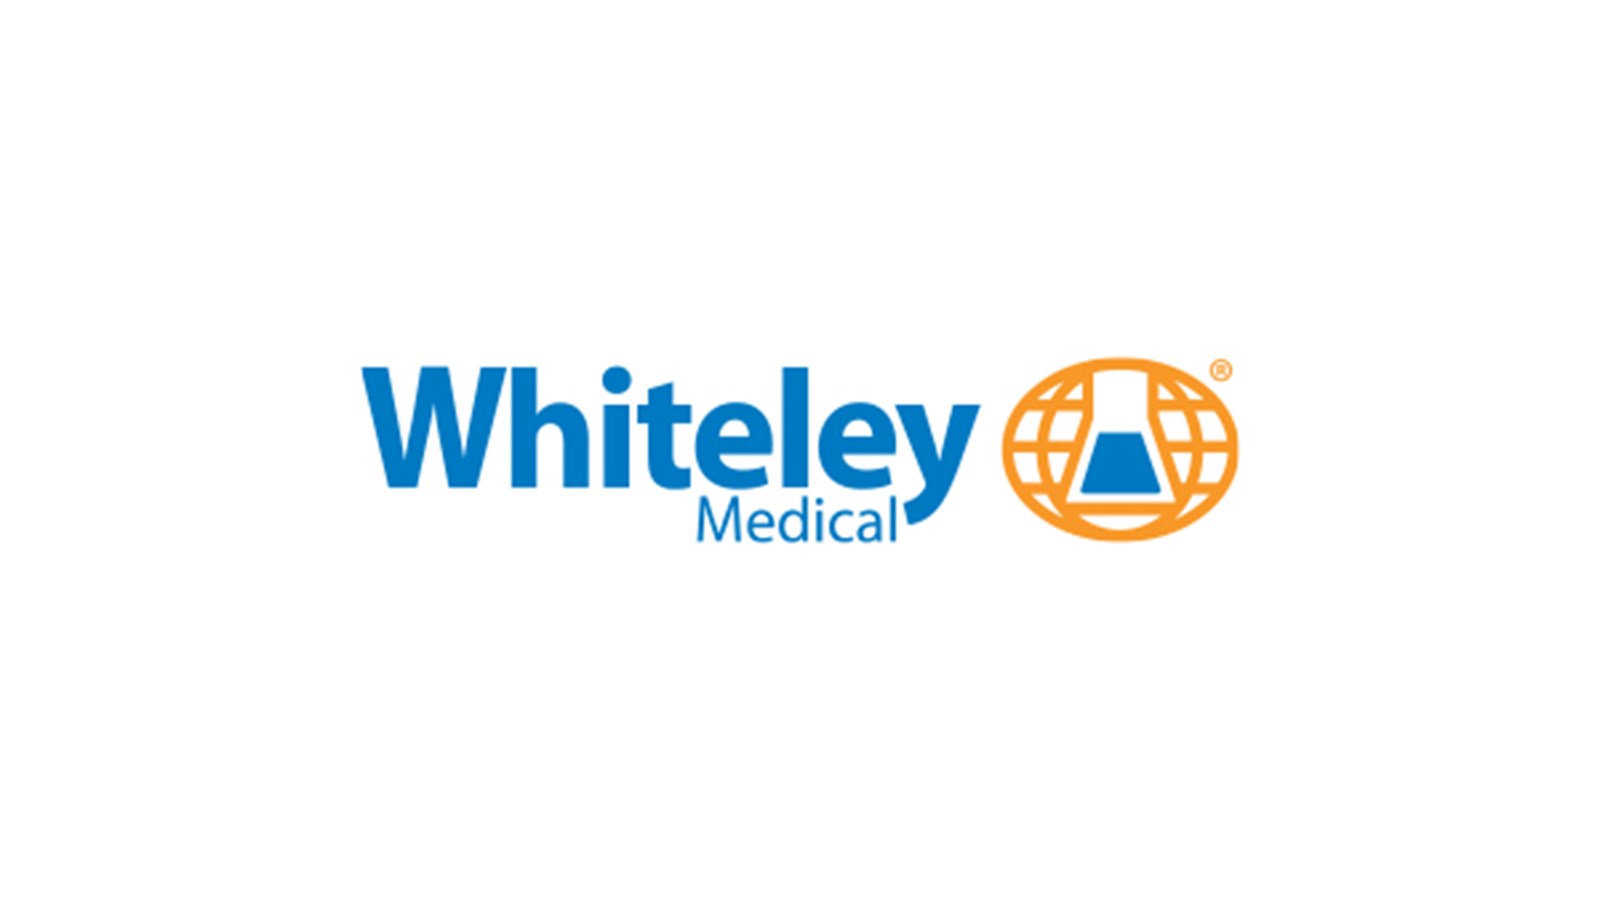 Whiteley Medical